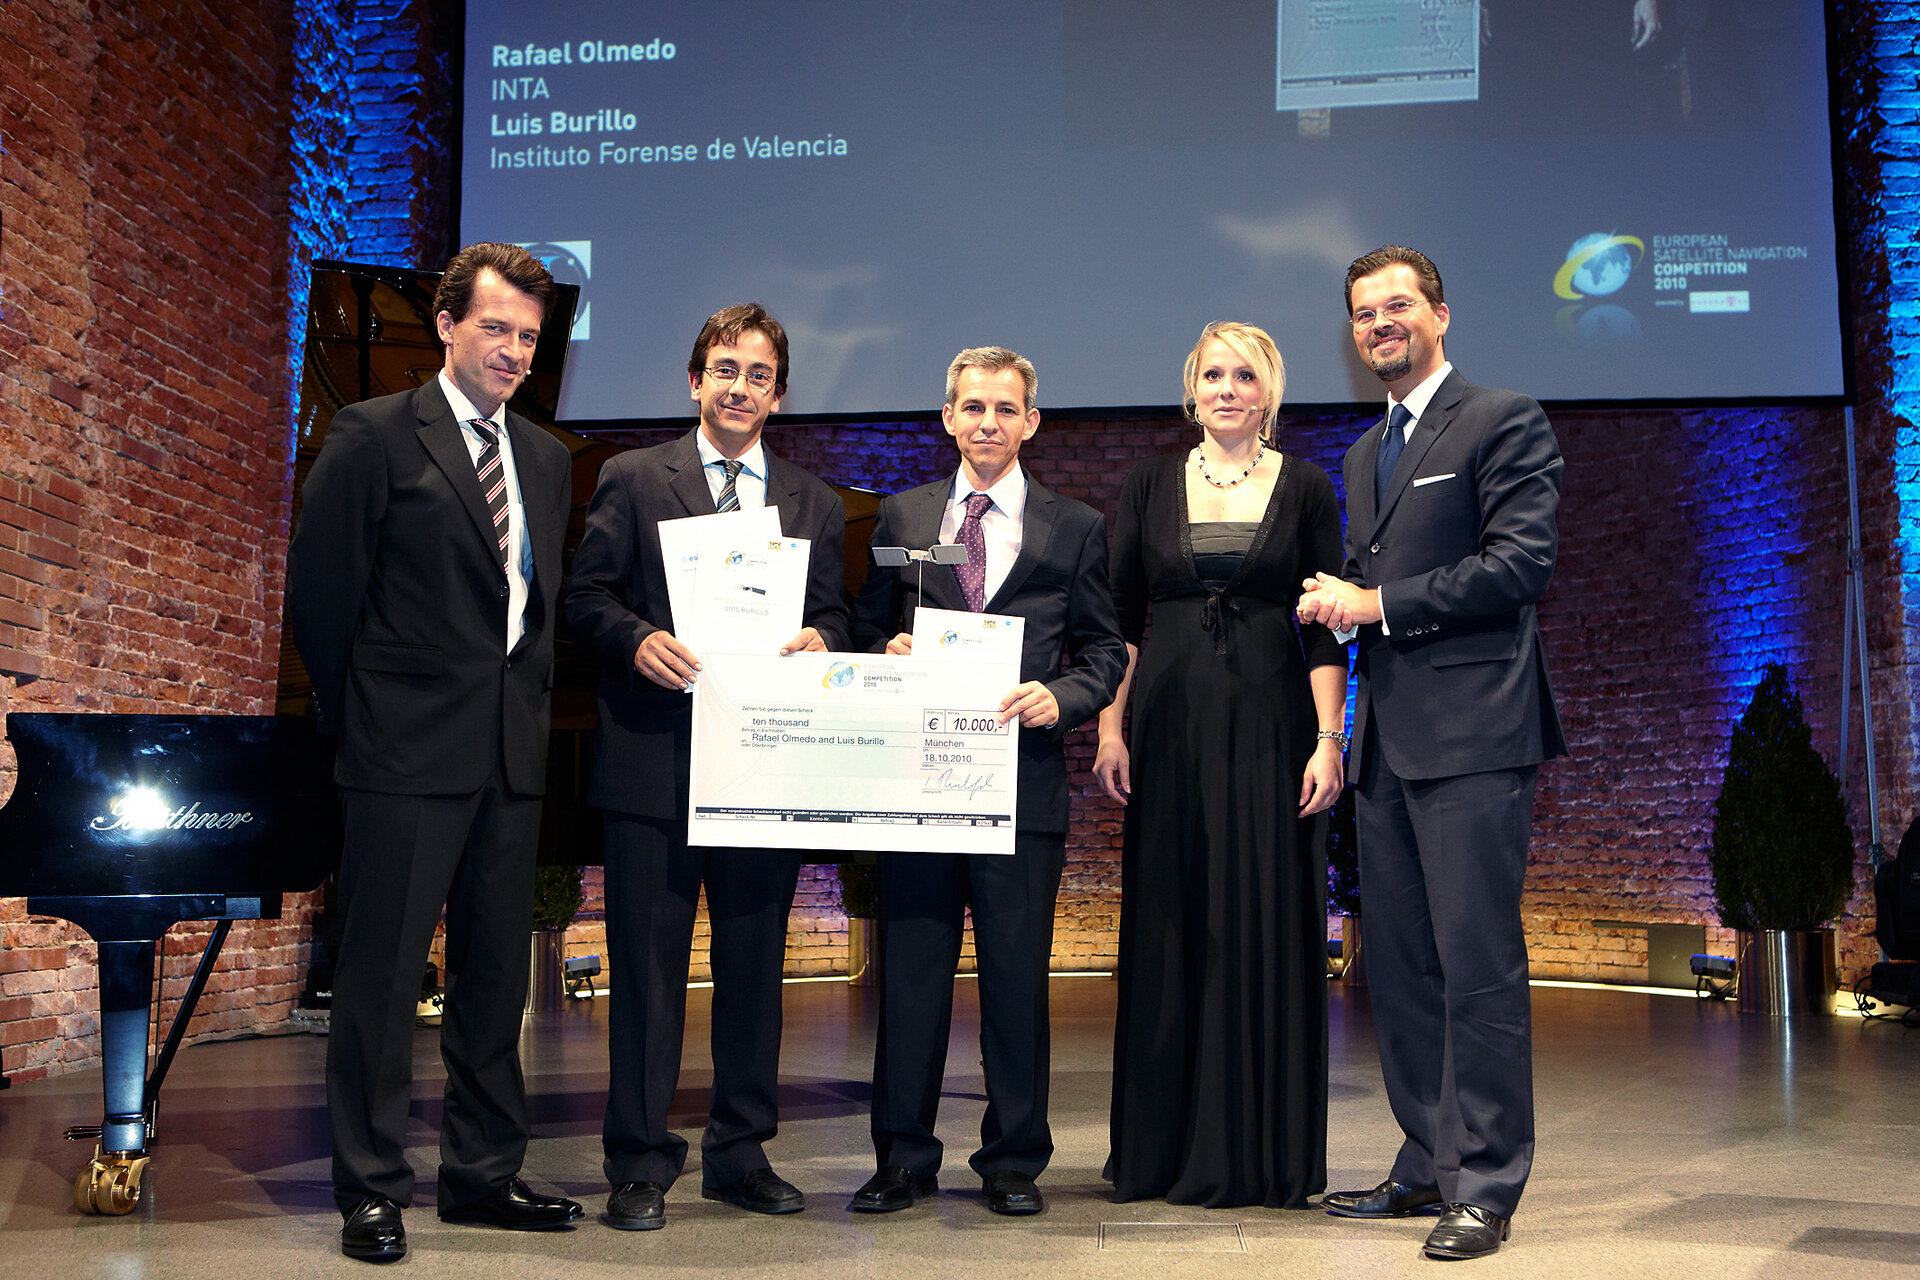 ESA Innovation Prize winners Olmedo and Burillo